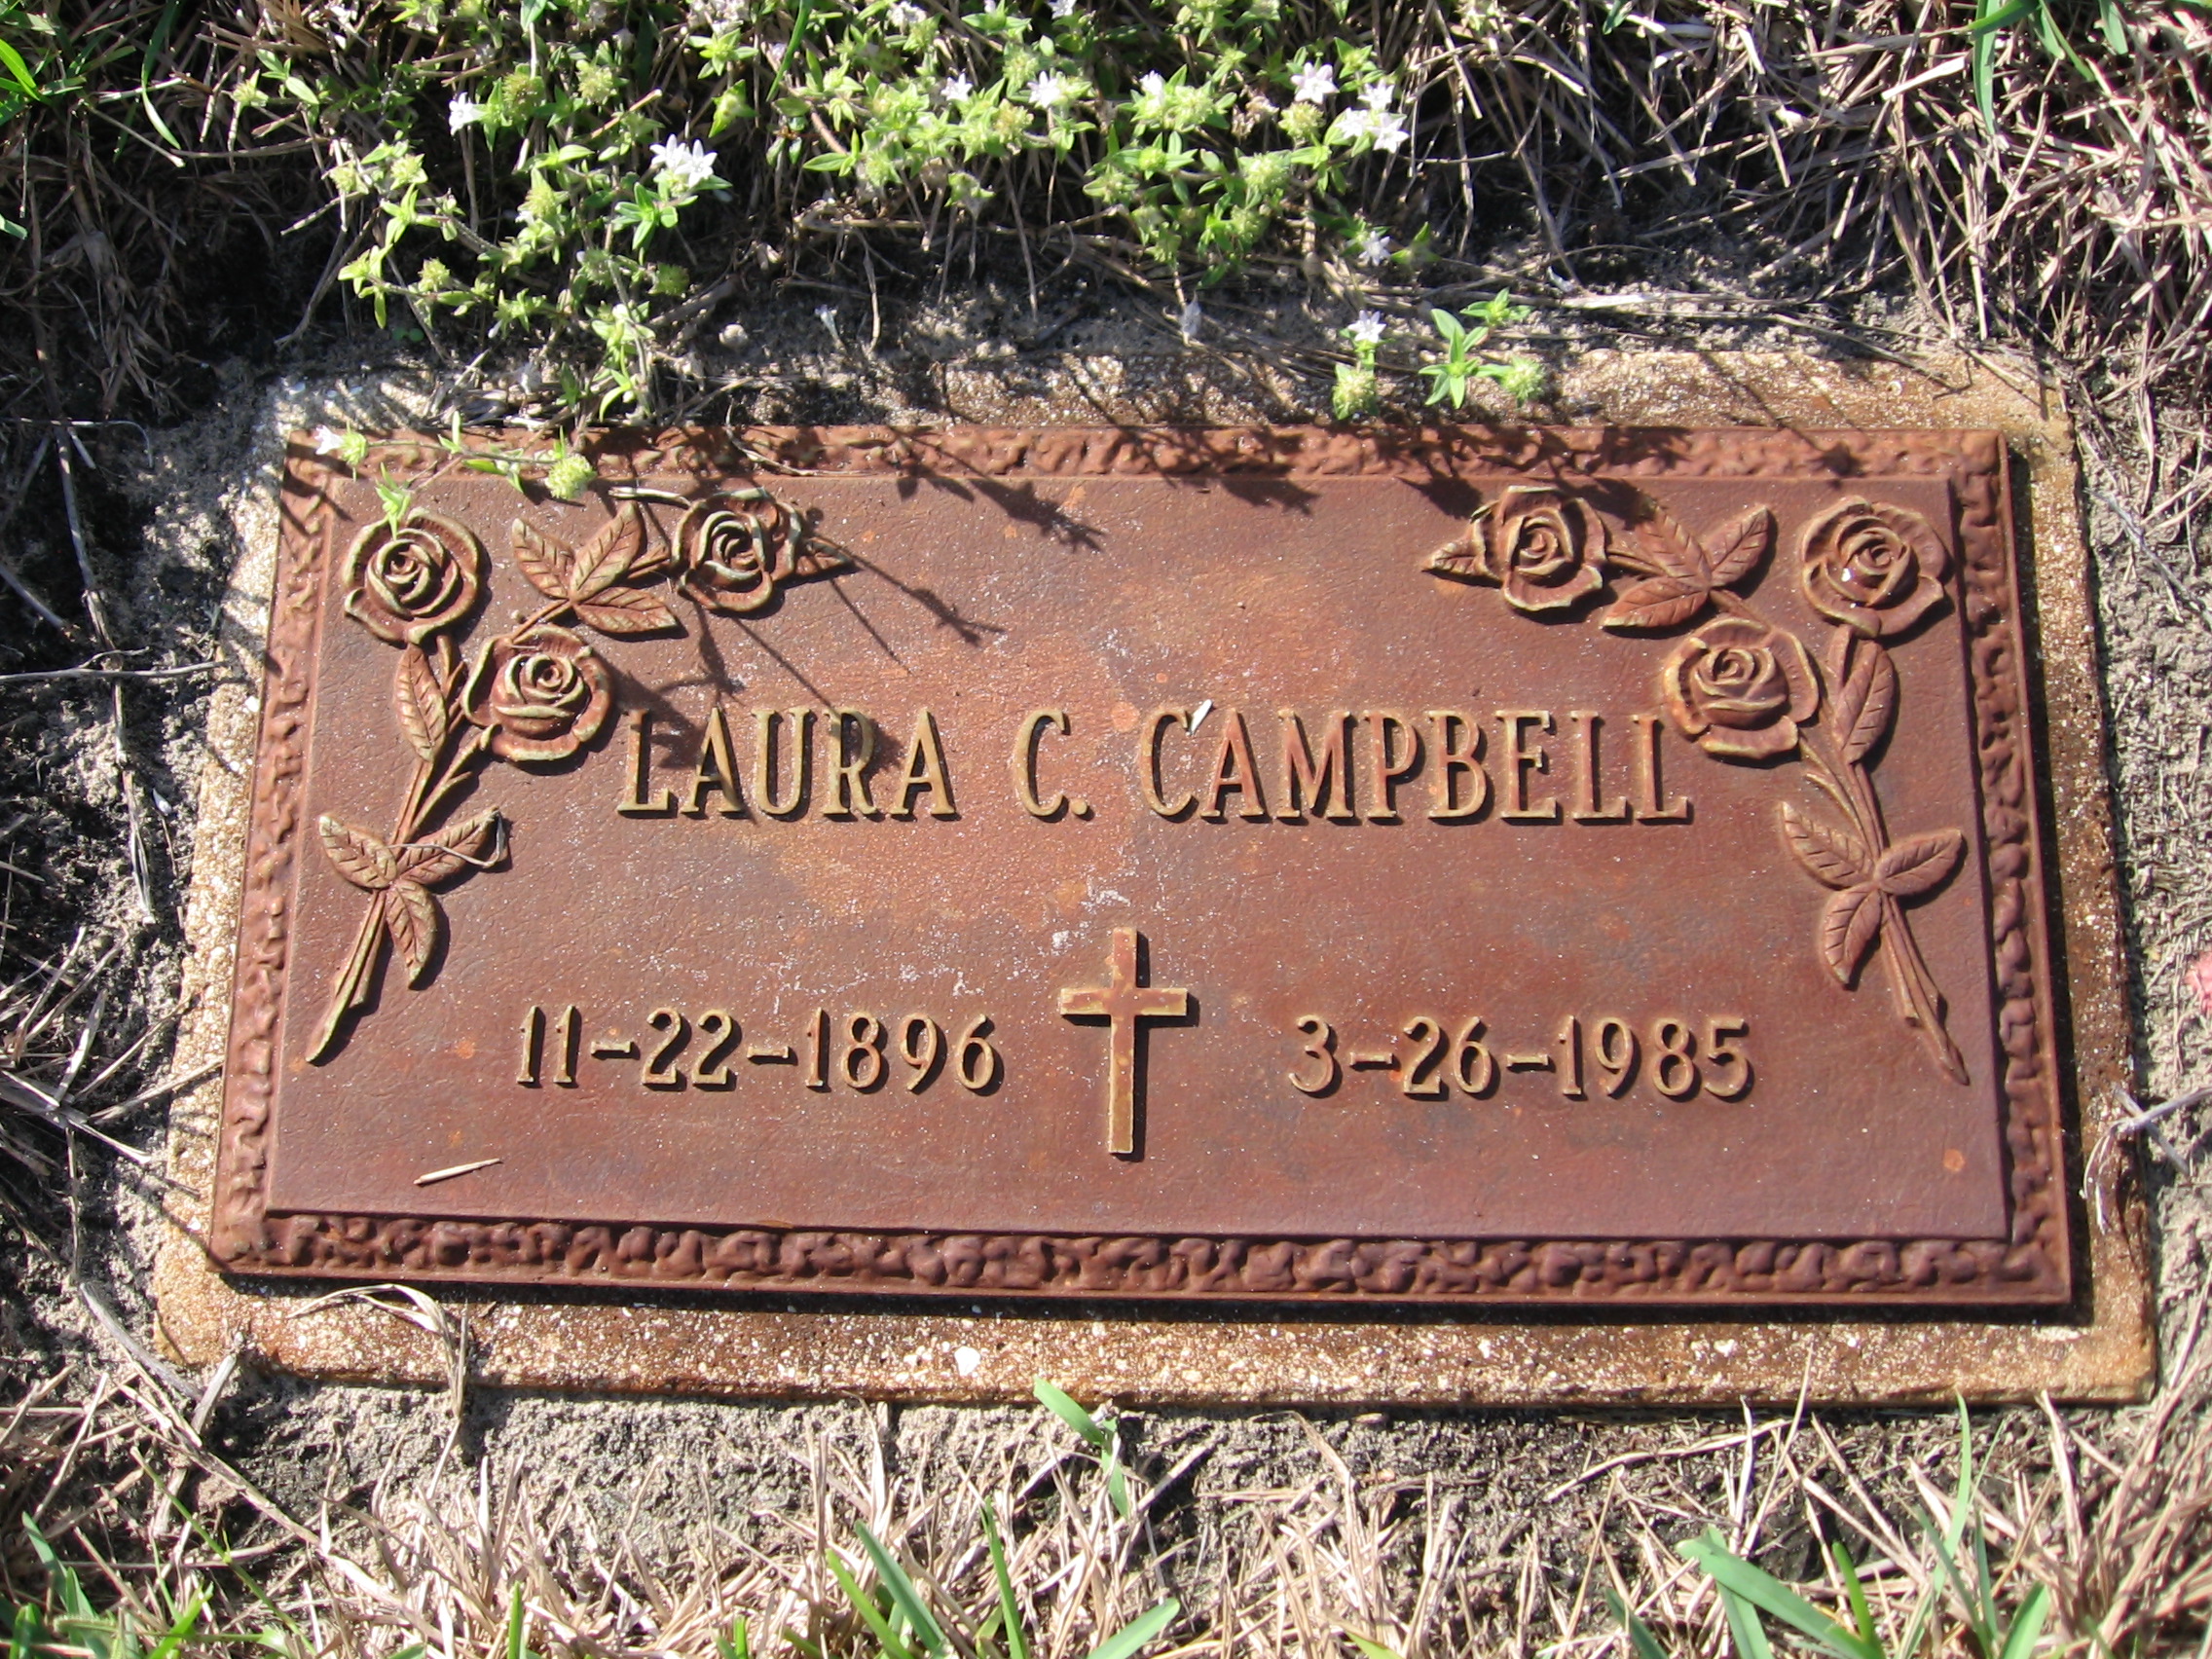 Laura C Campbell